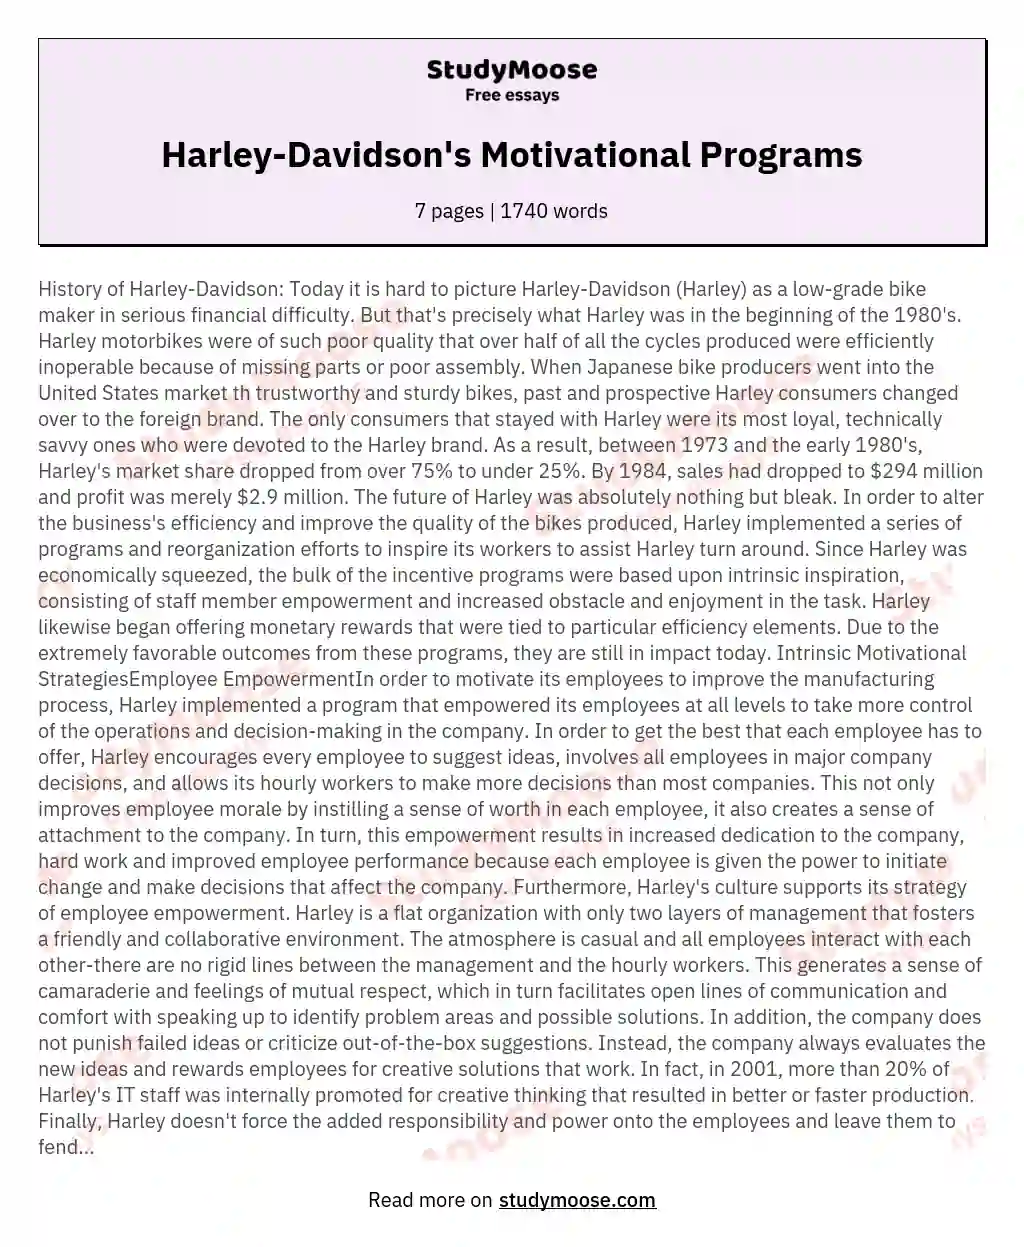 Harley-Davidson's Motivational Programs essay